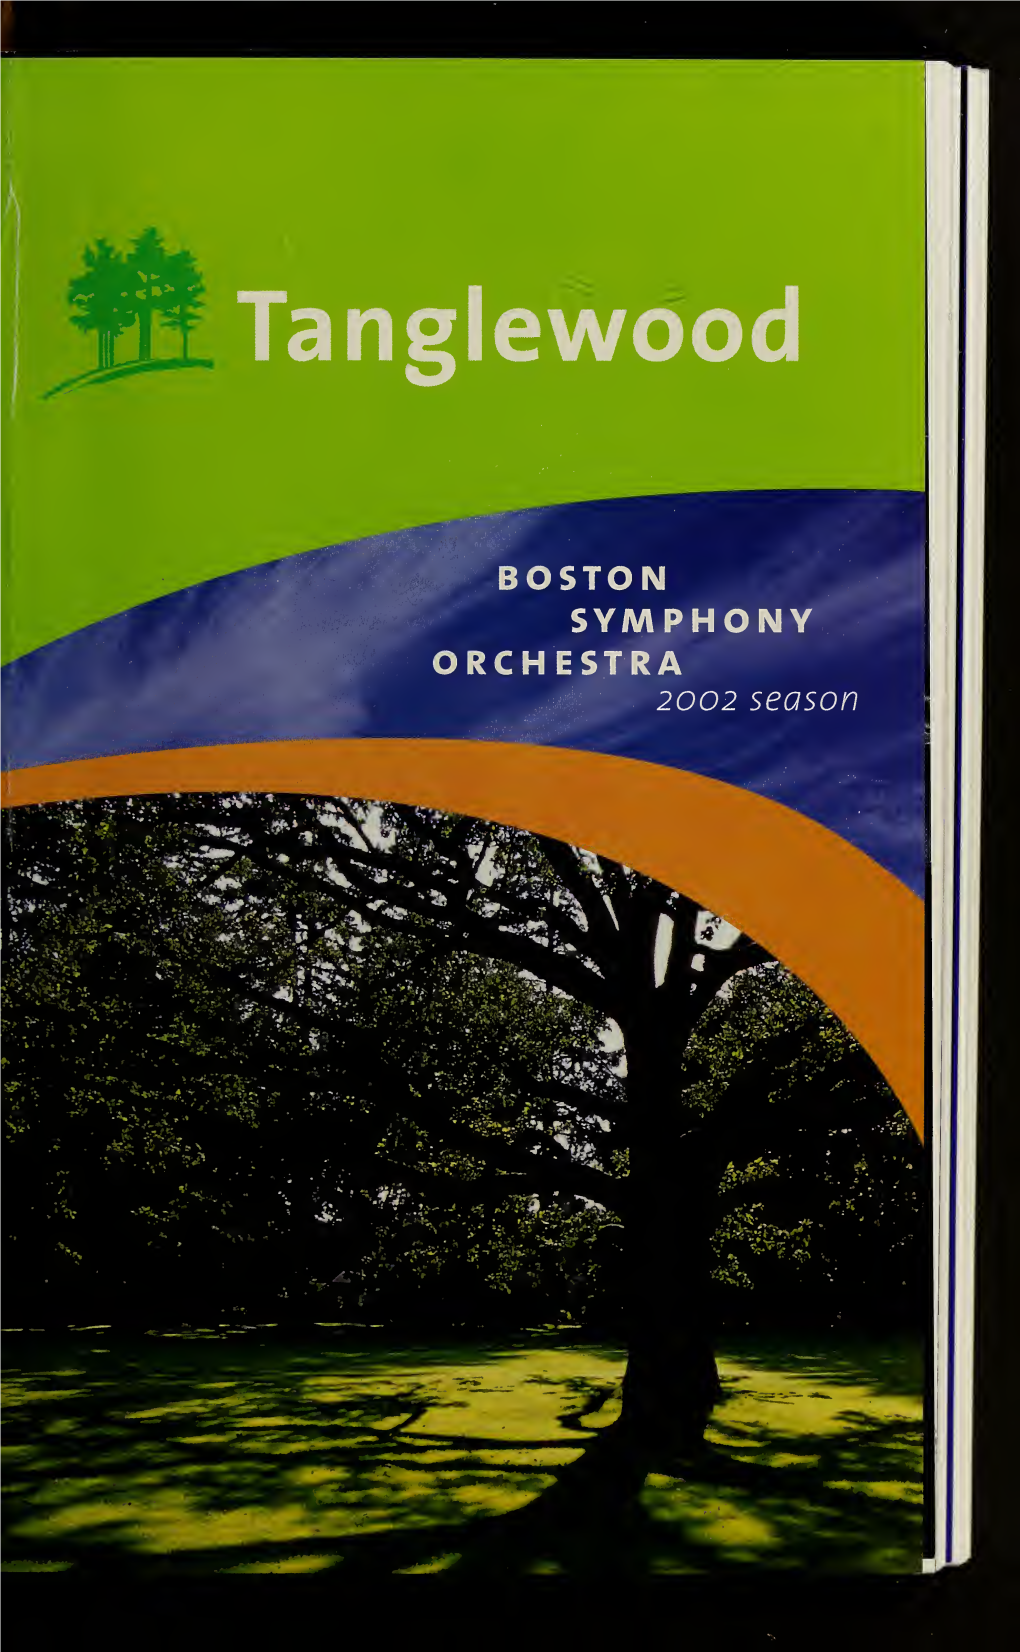 Boston Symphony Orchestra Concert Programs, Summer, 2002